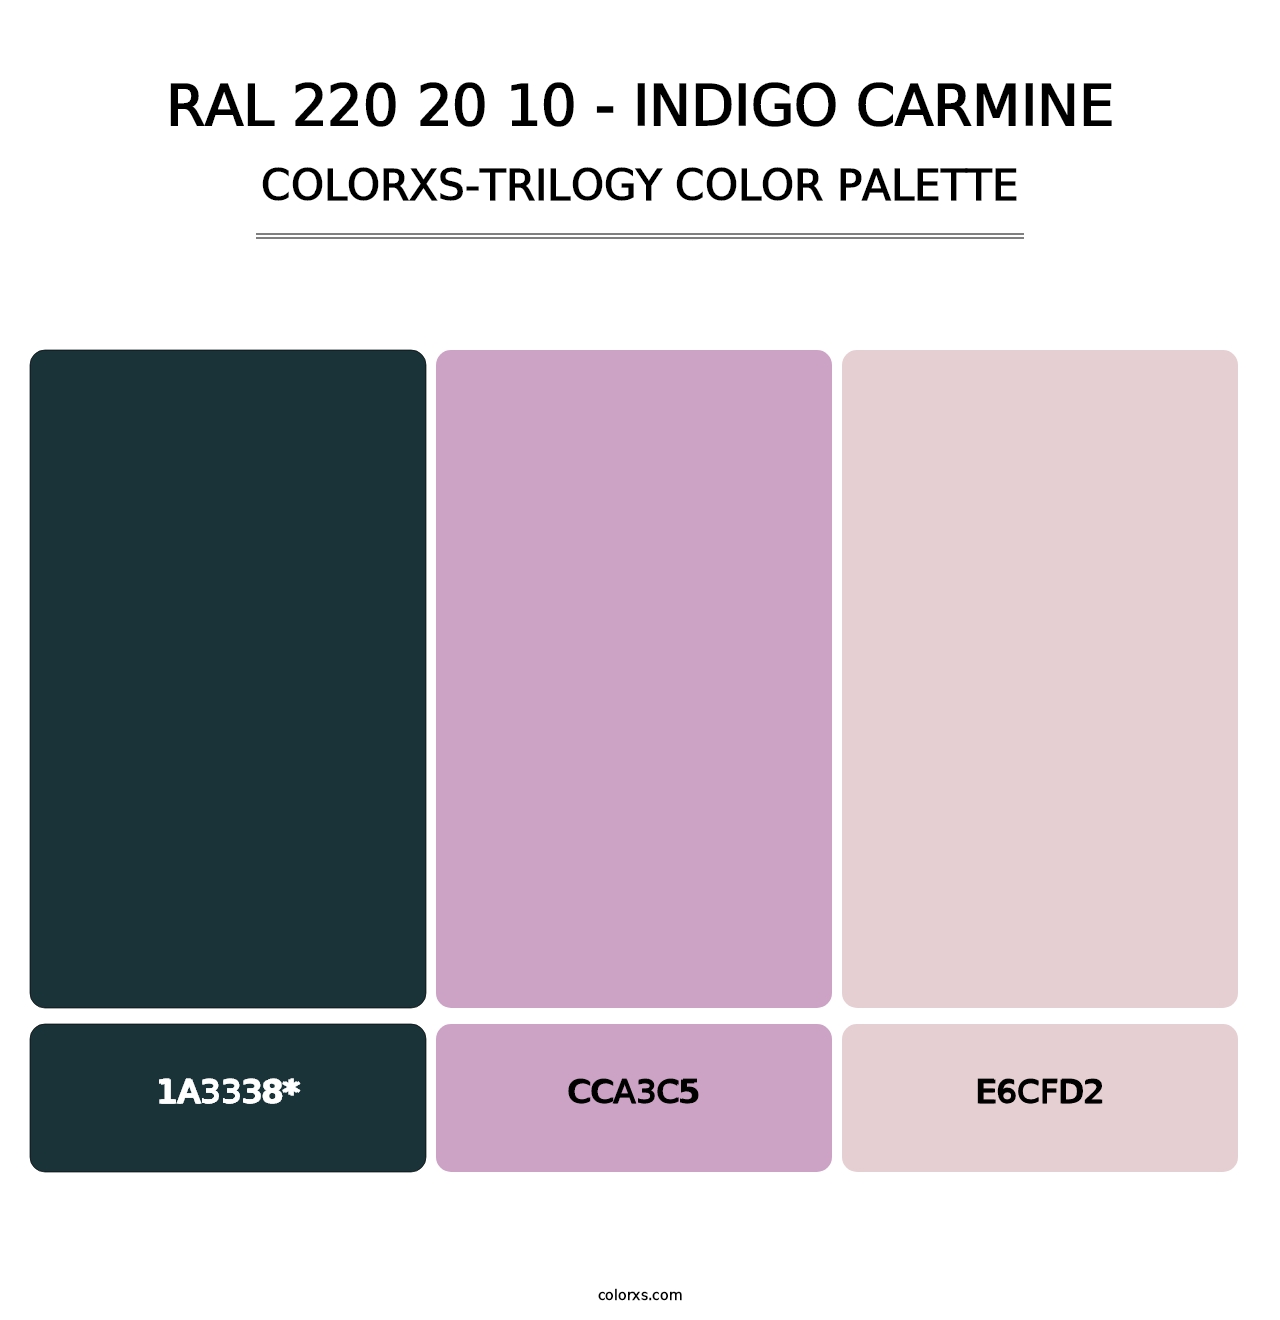 RAL 220 20 10 - Indigo Carmine - Colorxs Trilogy Palette